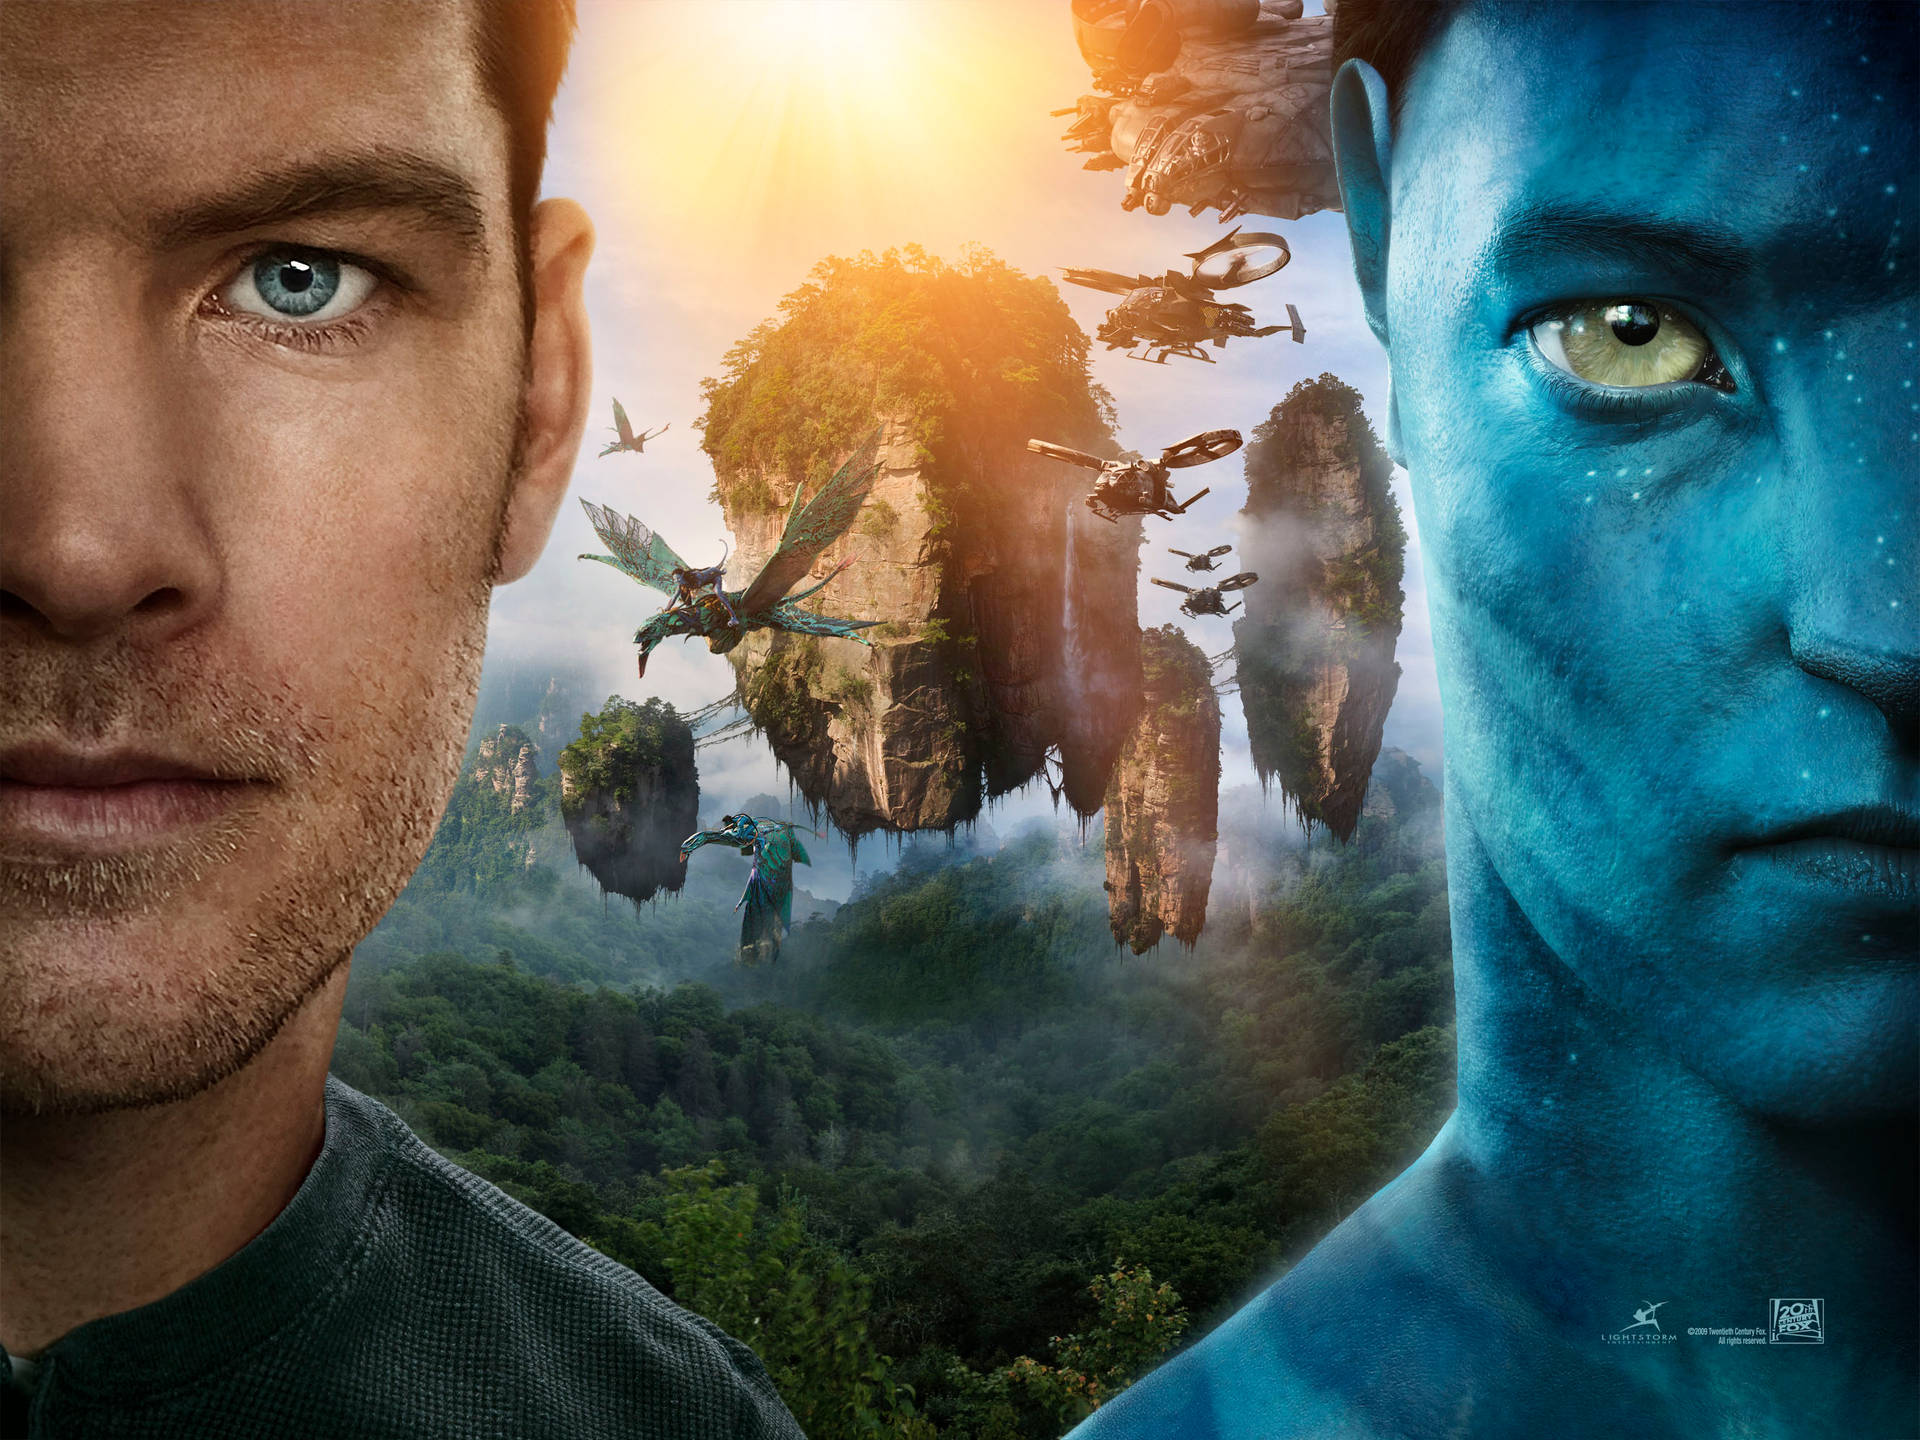 Caption: Avatar Movie Scene With Stunning Visuals